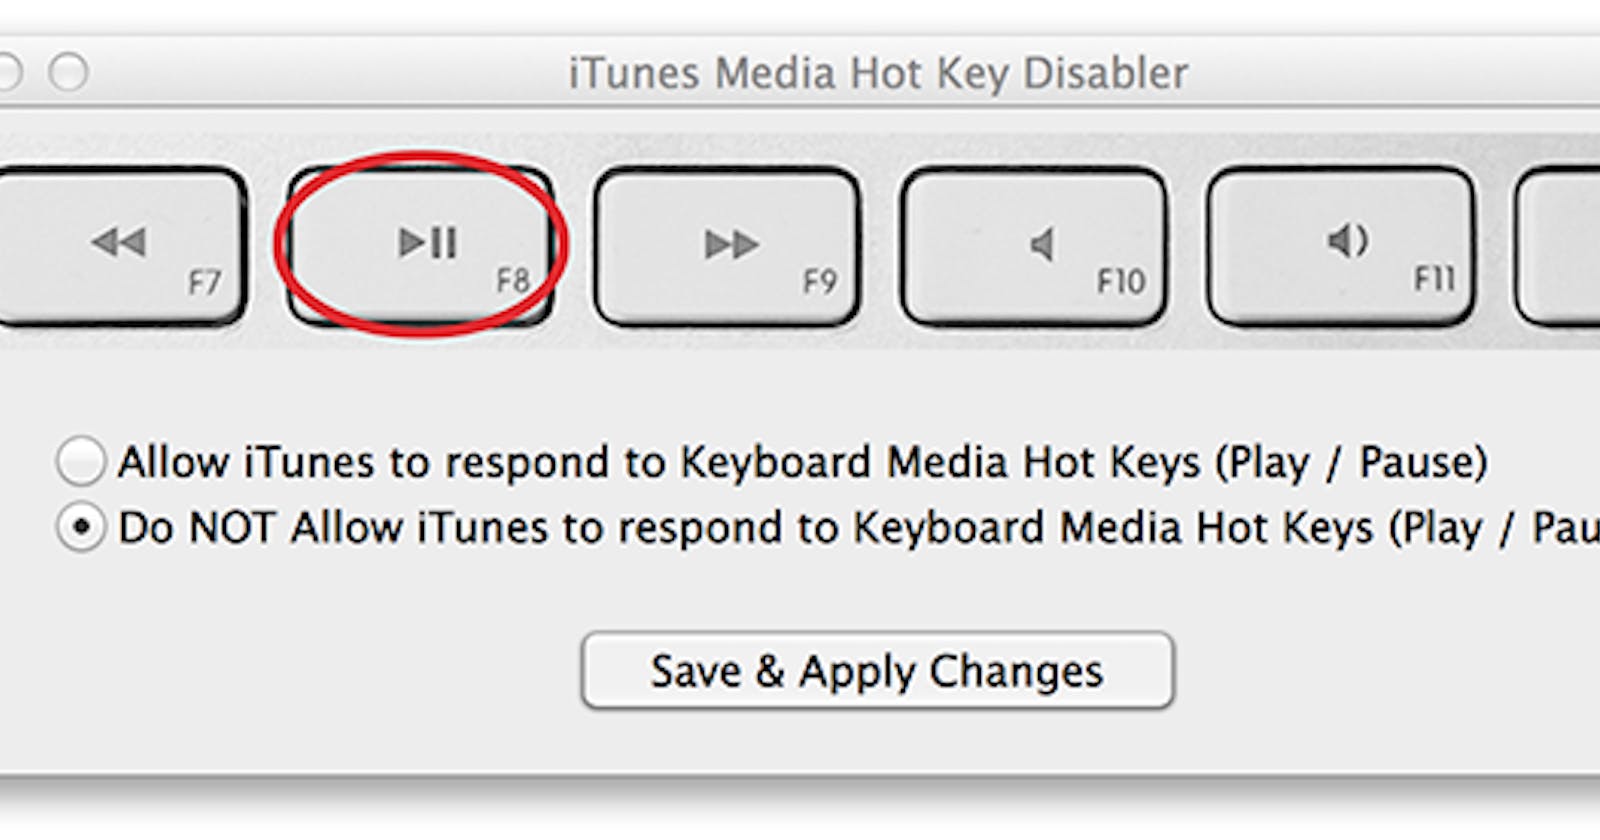 iTunes Media HotKey Disabler